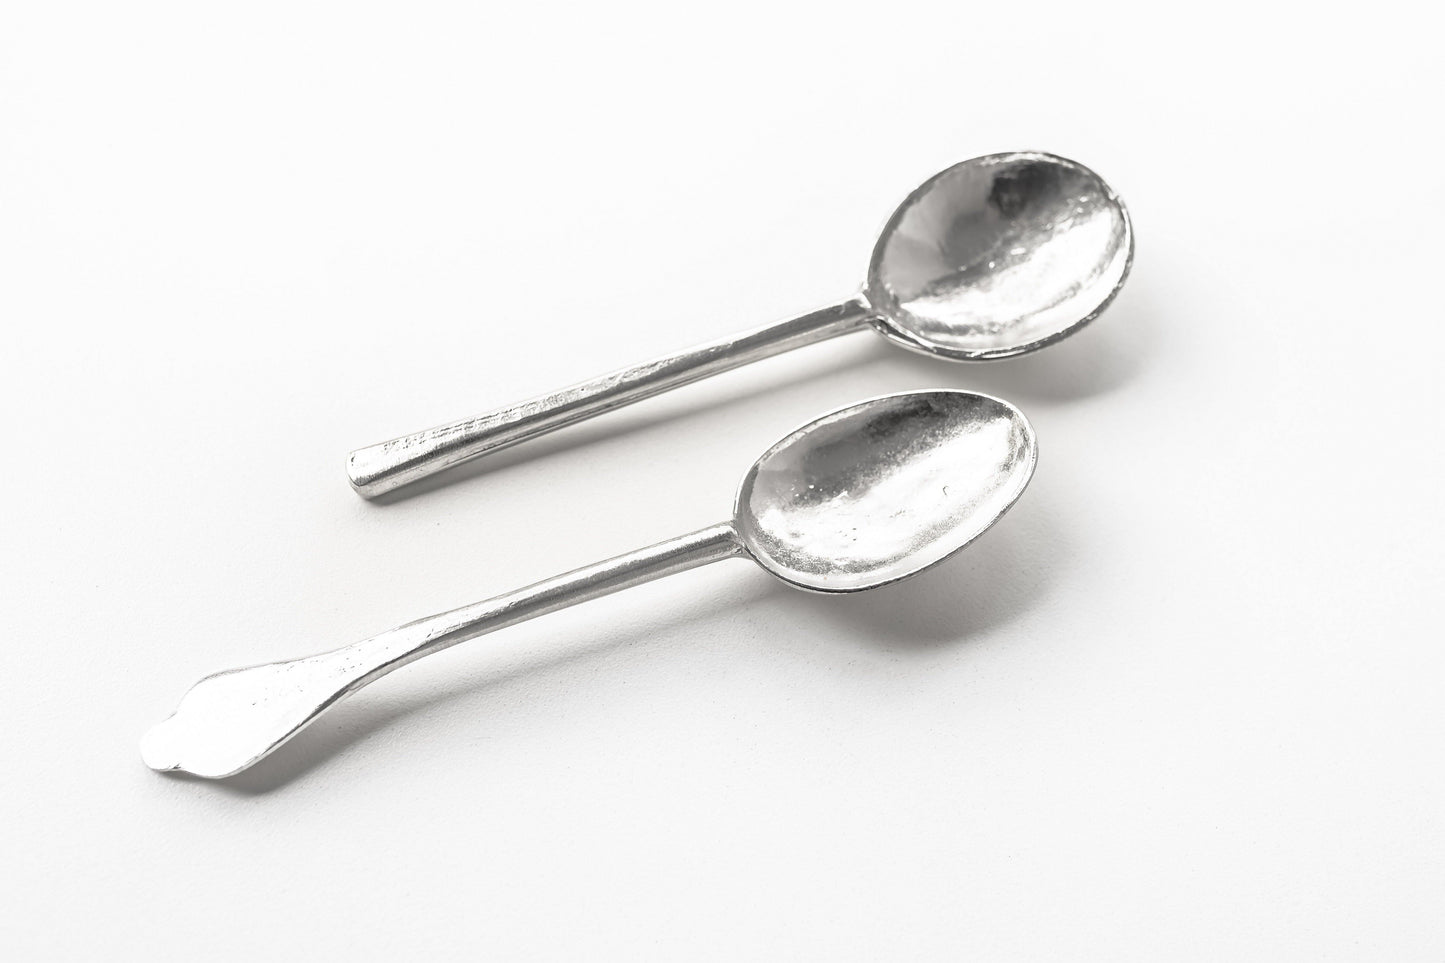 rustic colonial spoon